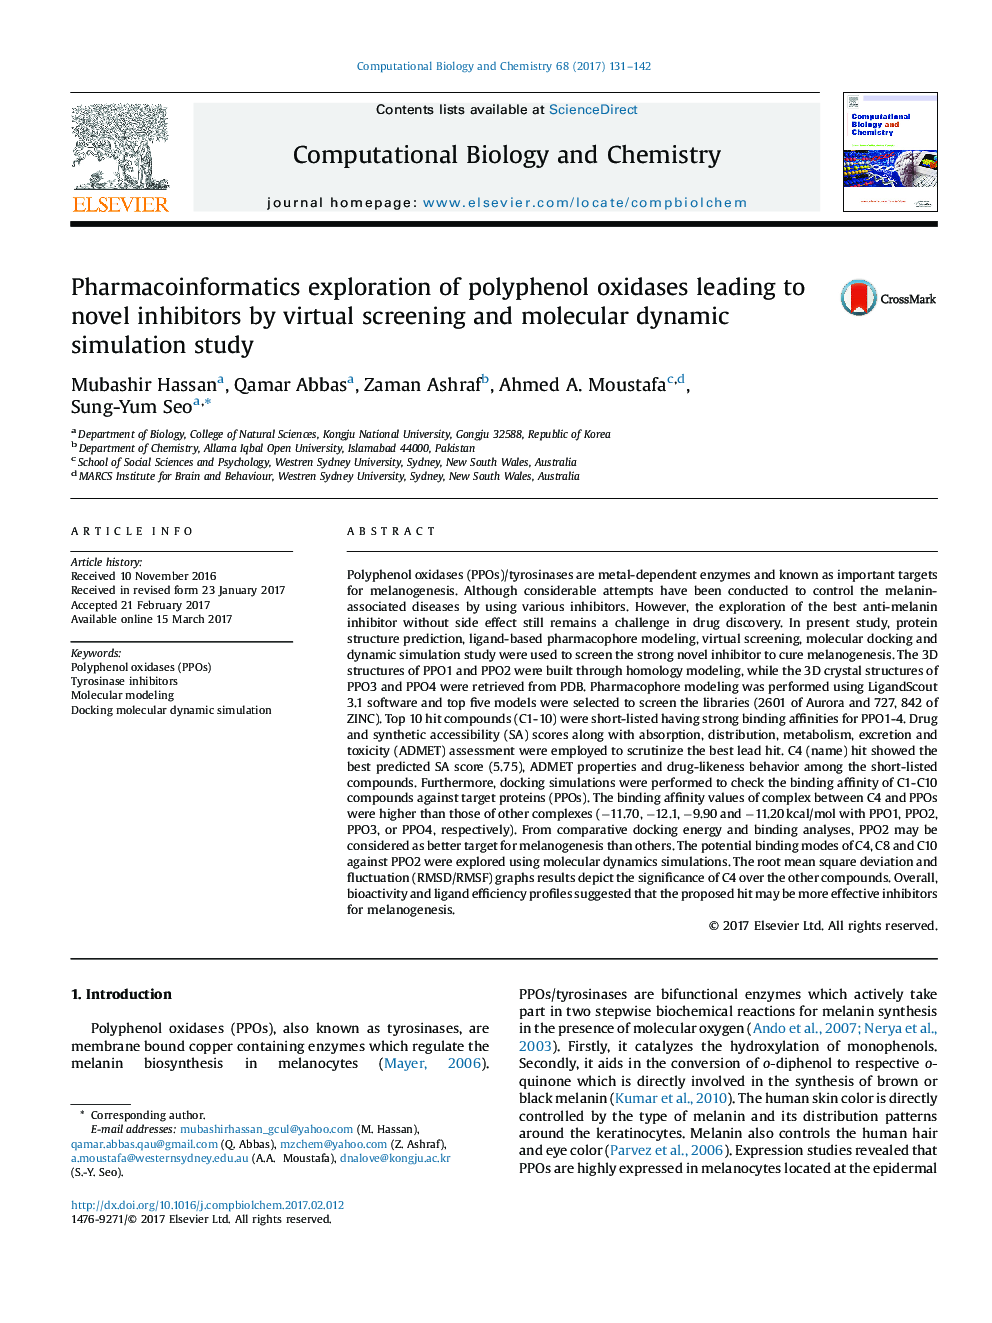 Pharmacoinformatics exploration of polyphenol oxidases leading to novel inhibitors by virtual screening and molecular dynamic simulation study